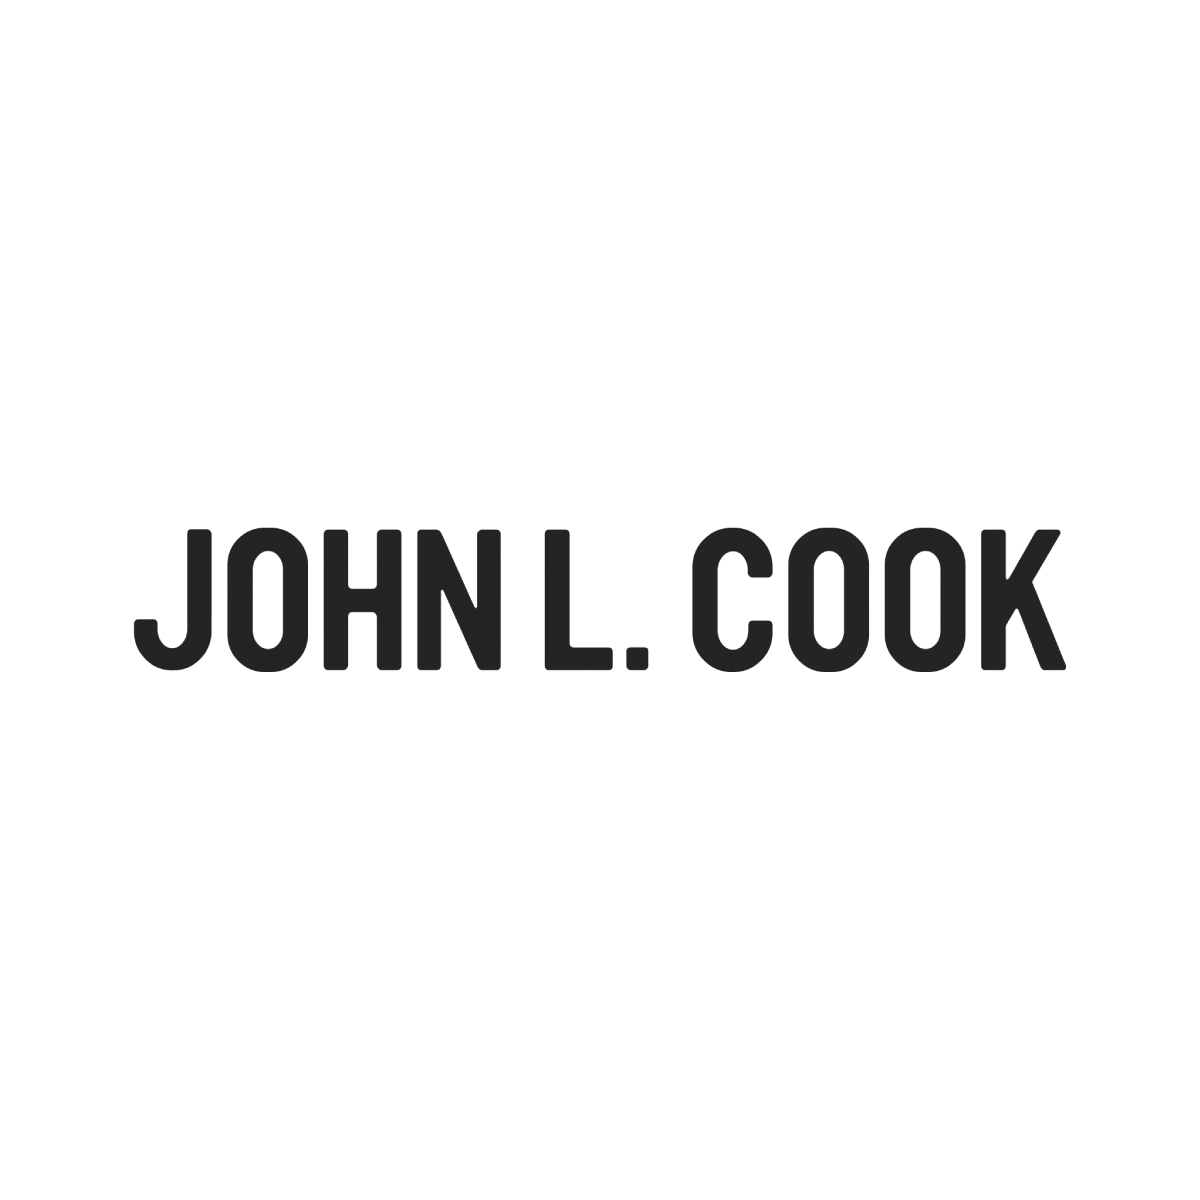 John L. Cook